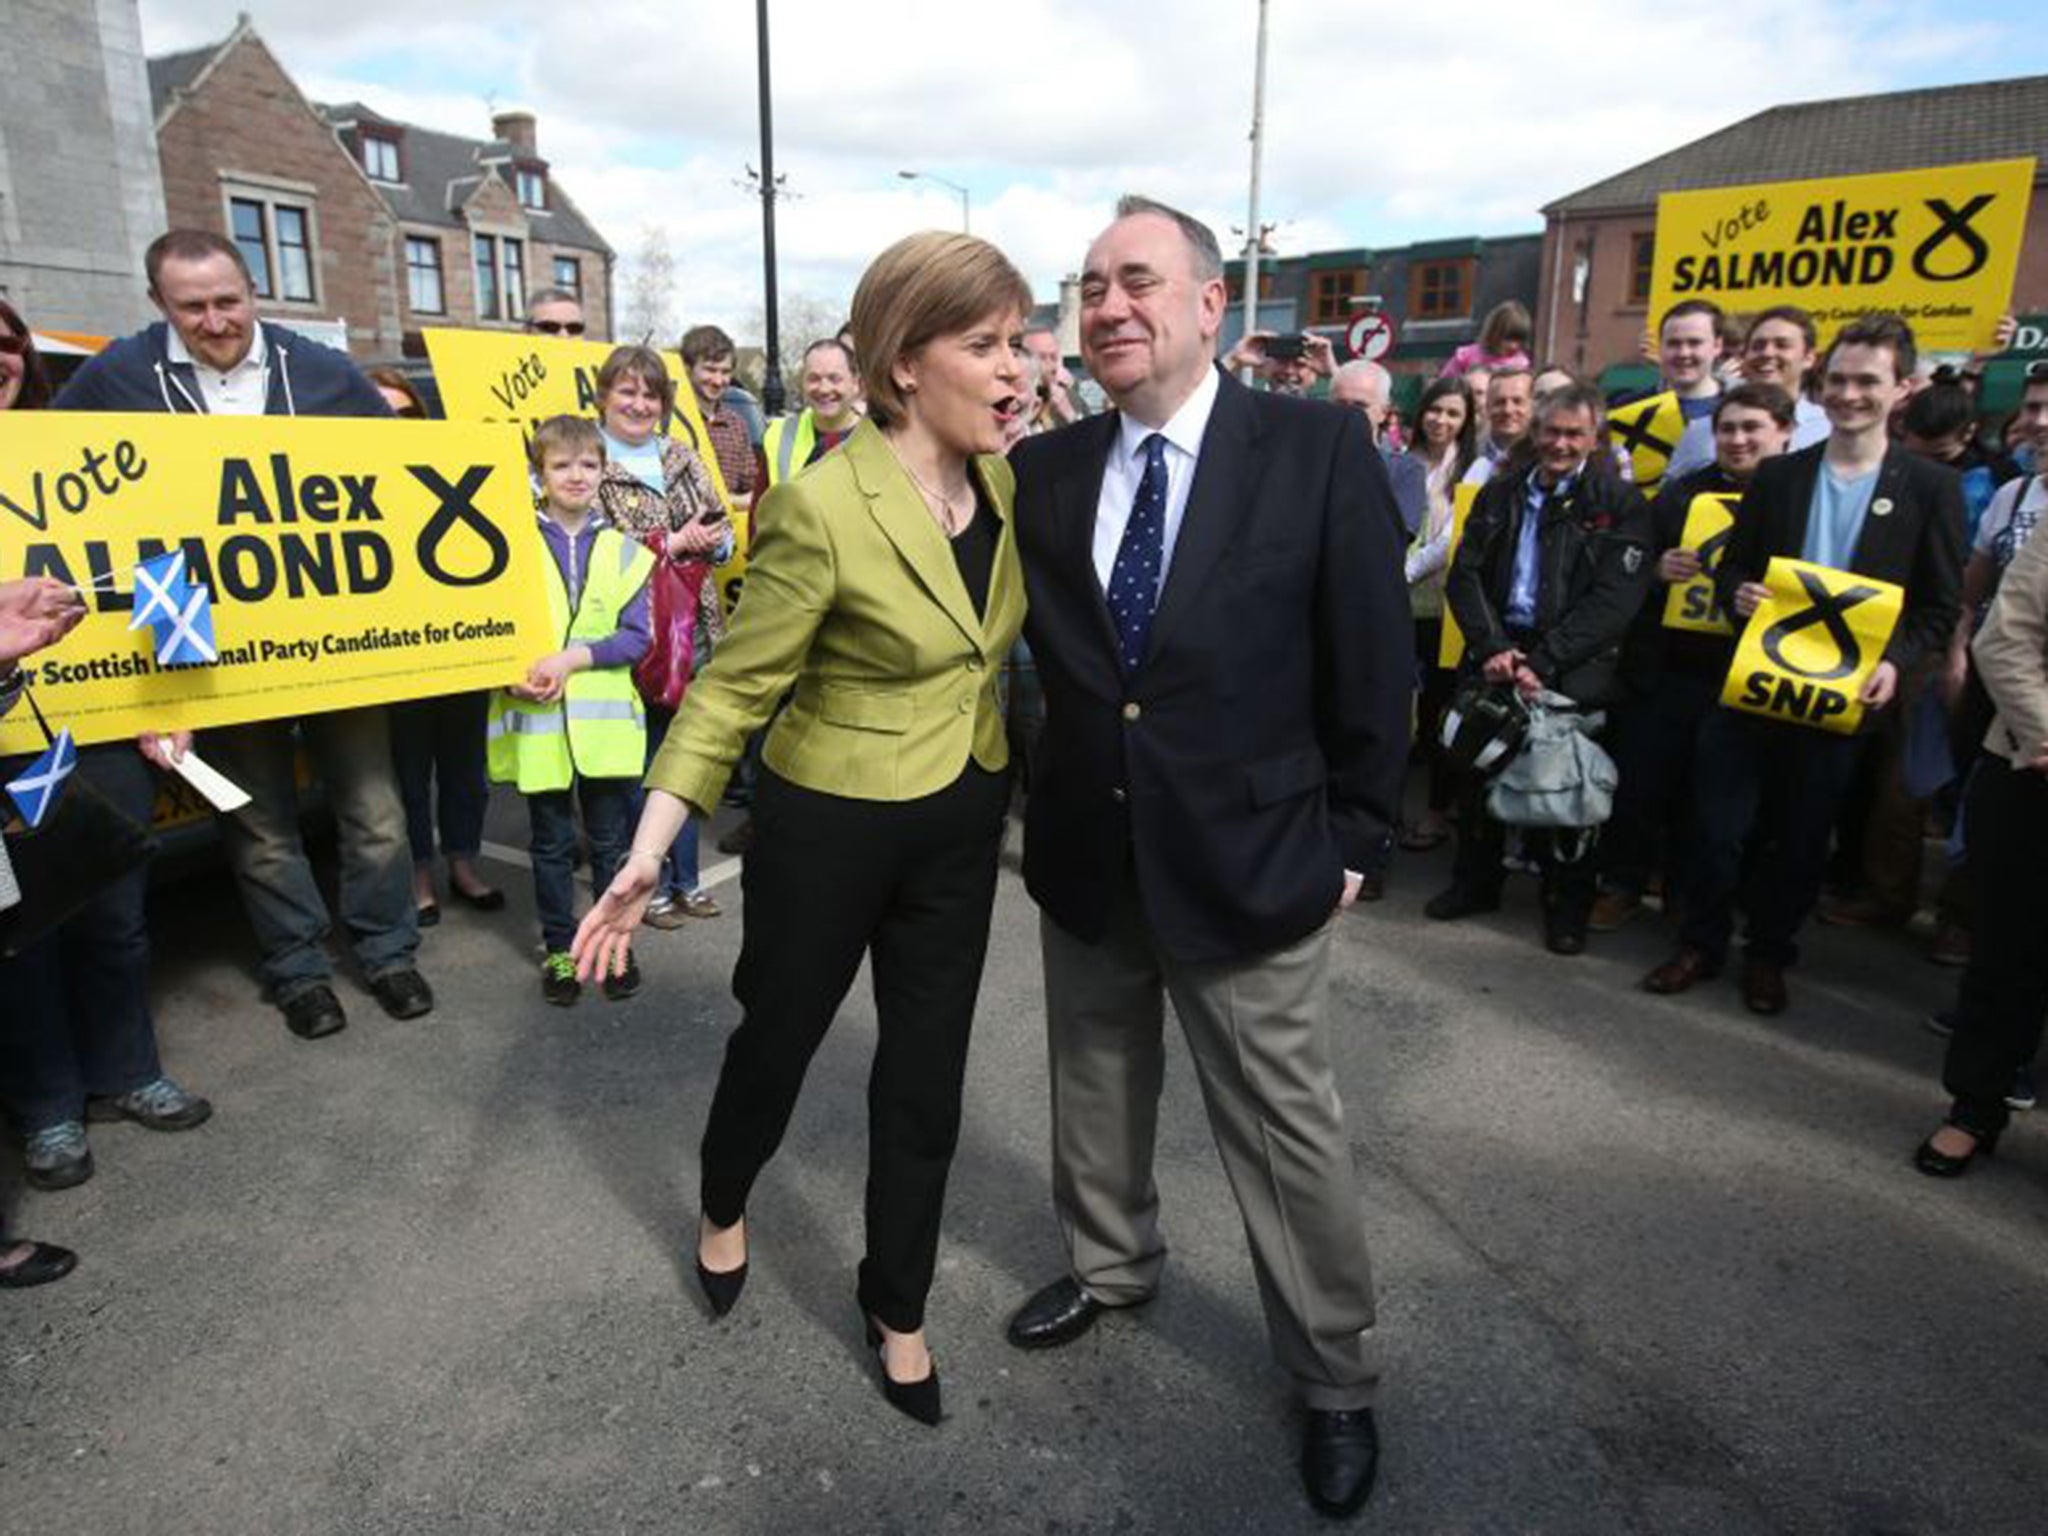 Alex Salmond with Nicola Sturgeon in Gordon